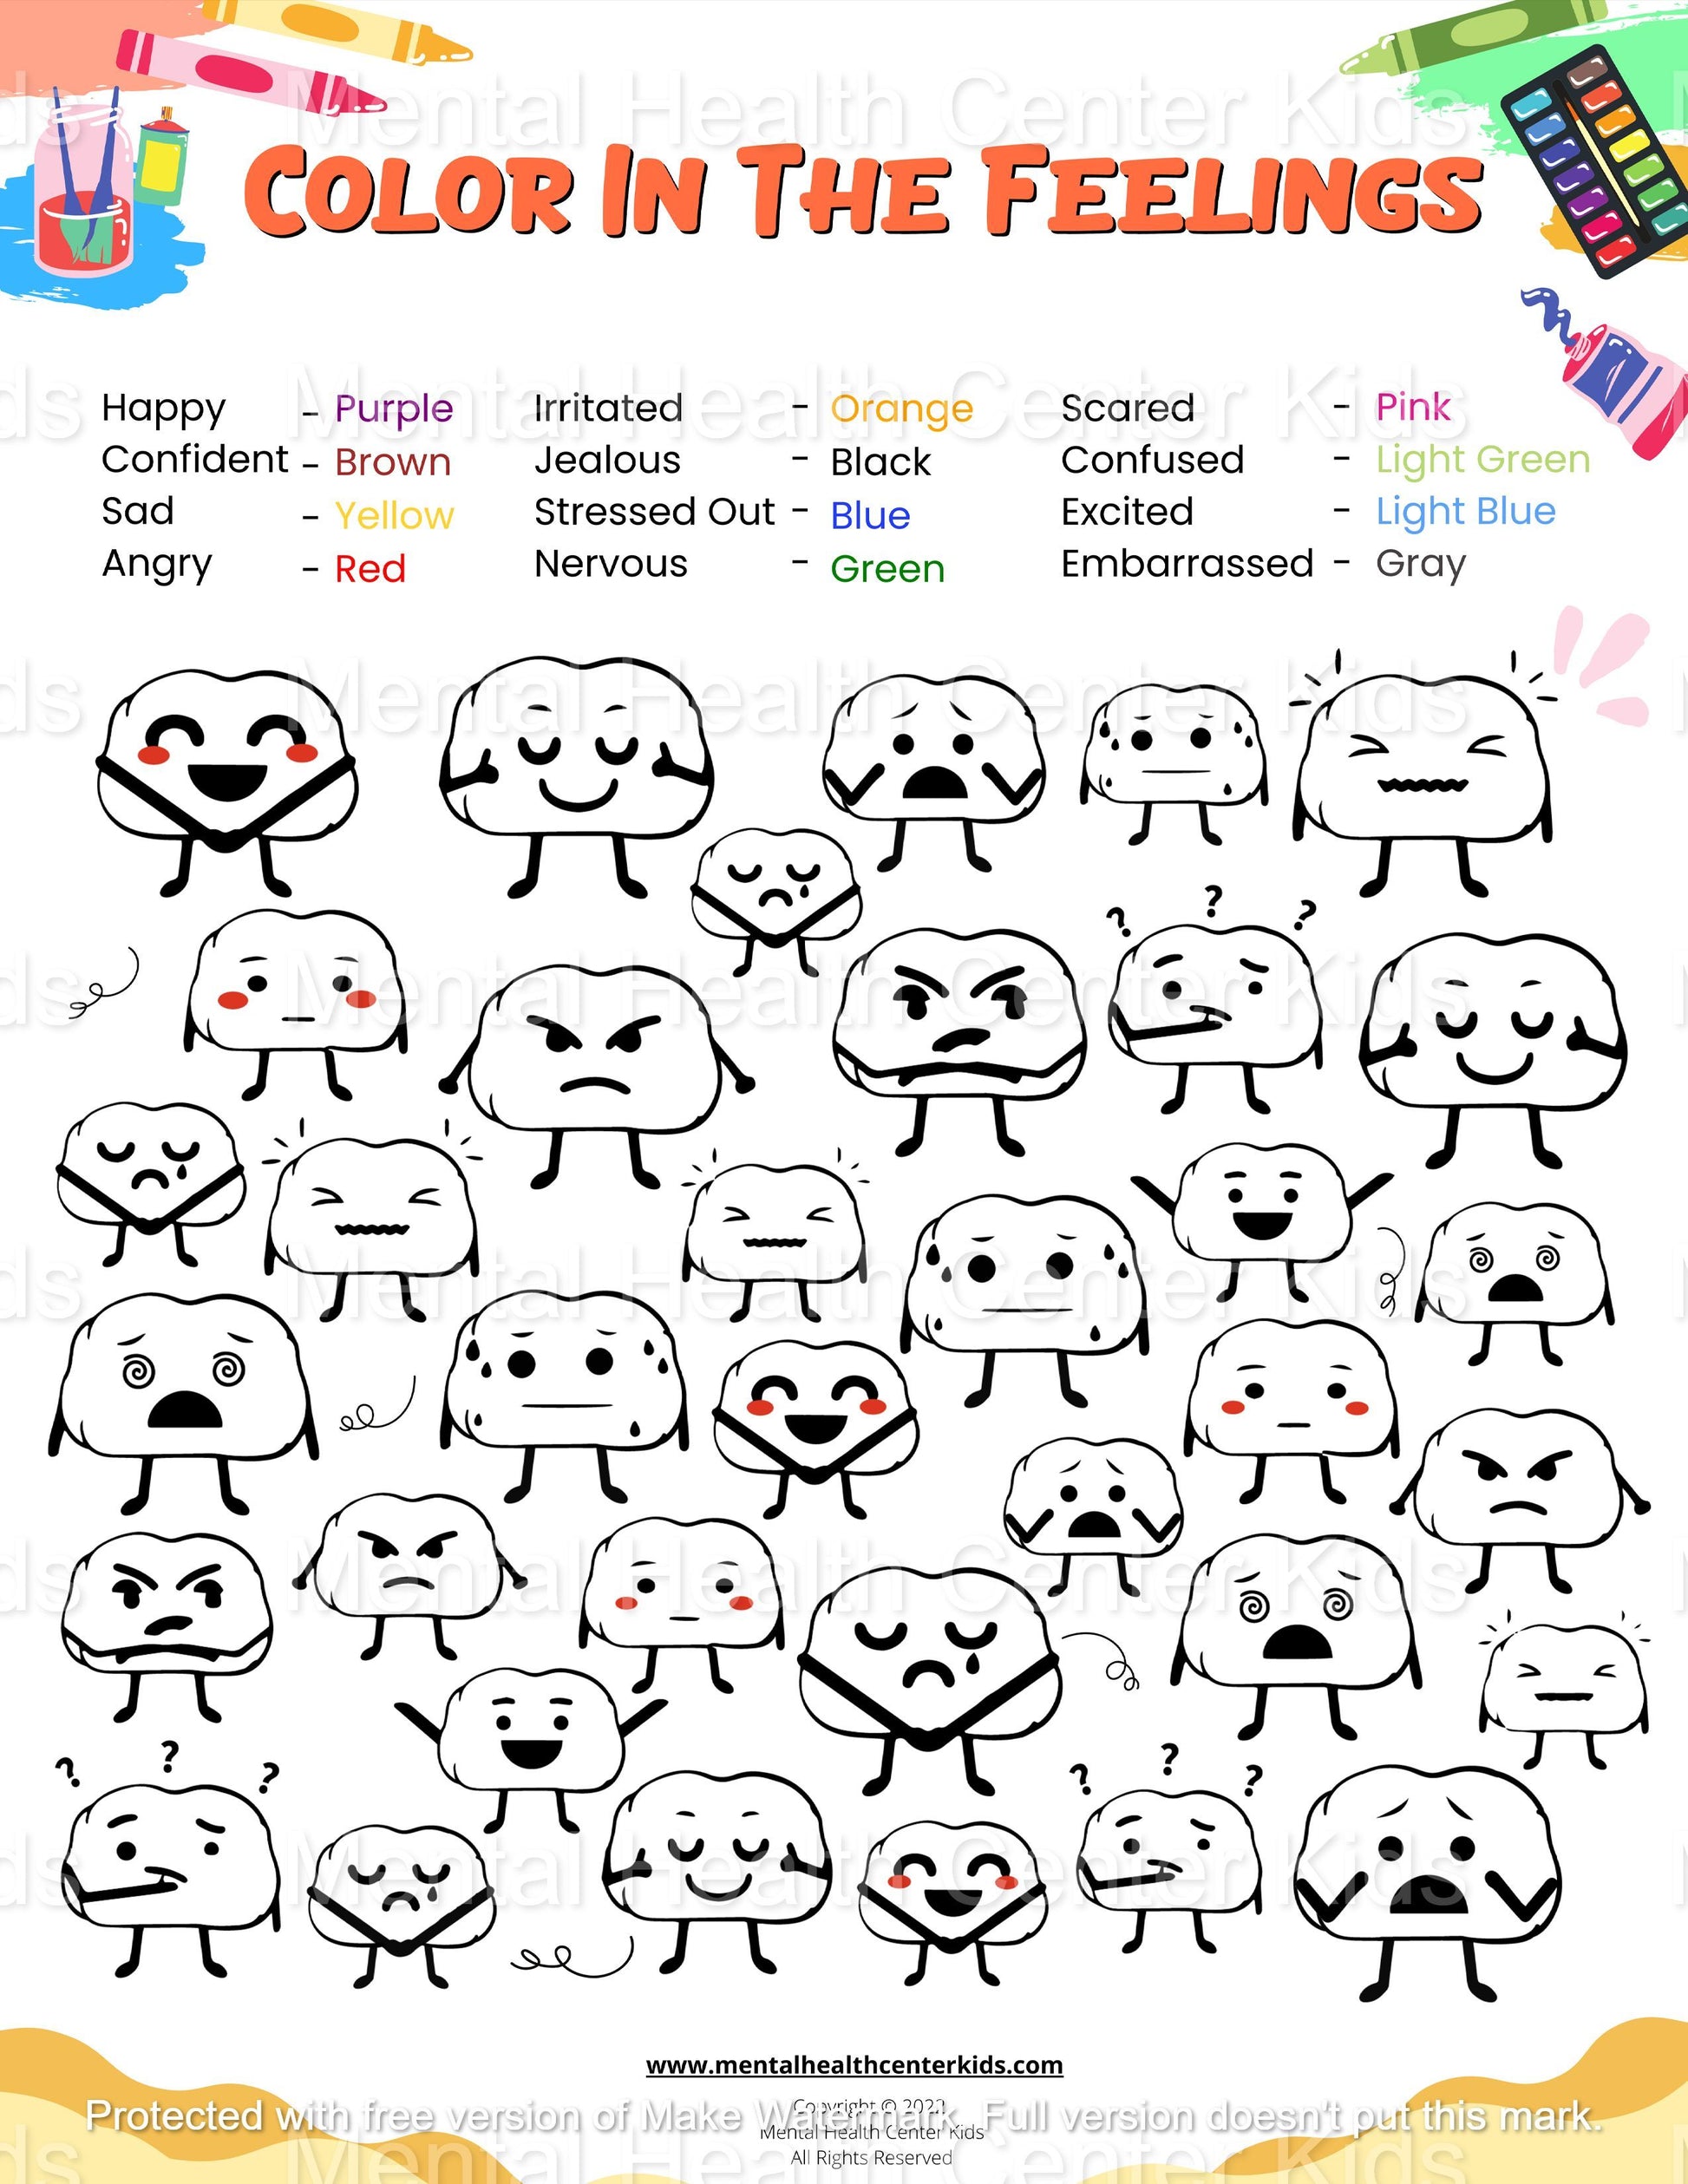 Emoji coloring page â mental health center kids